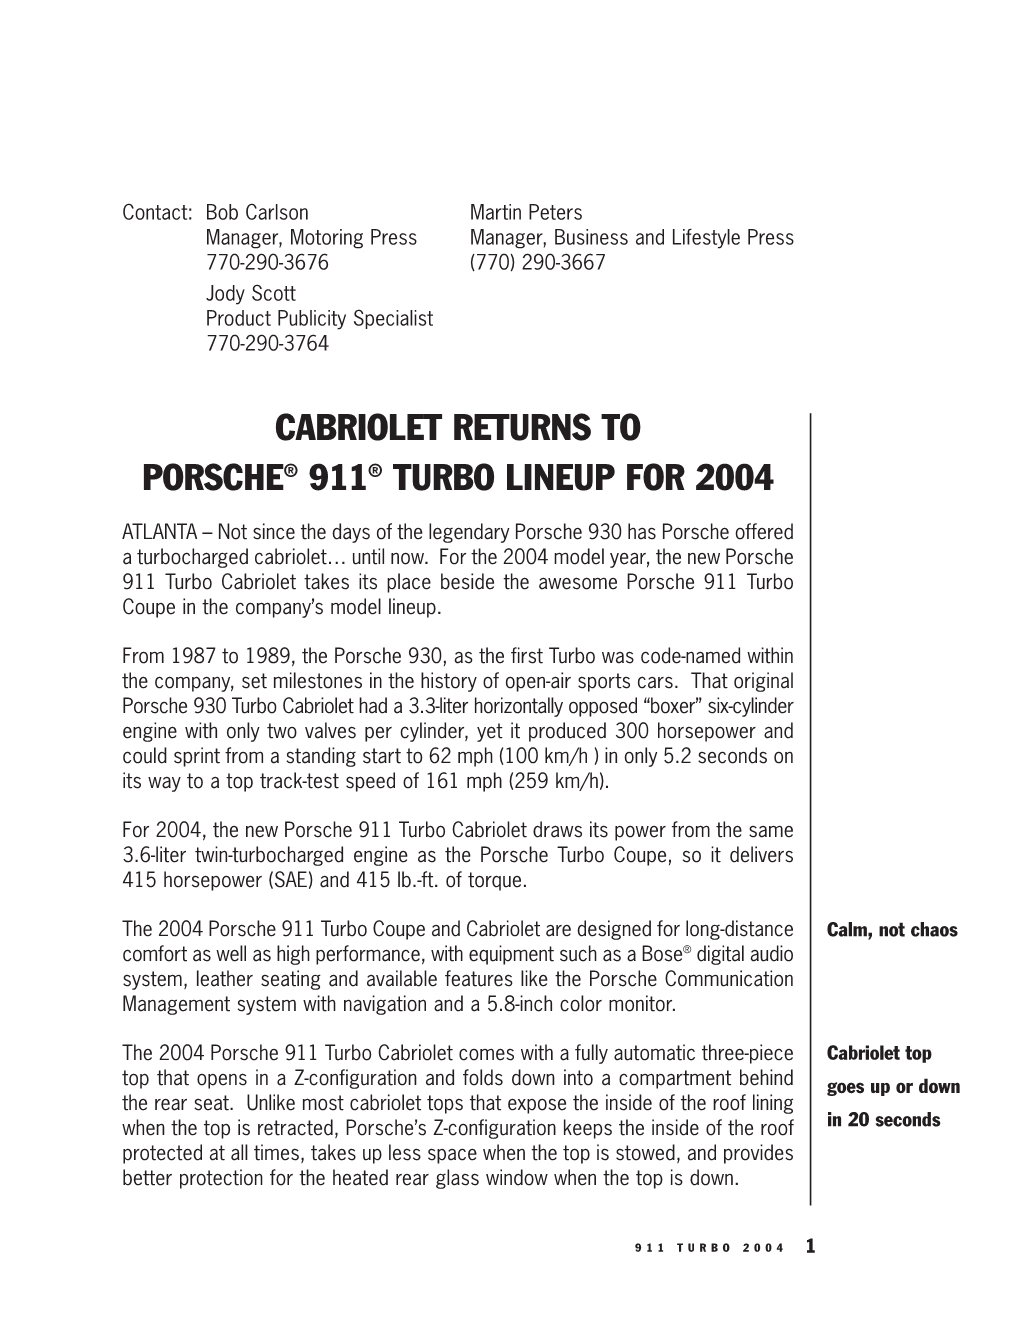 Cabriolet Returns to Porsche® 911® Turbo Lineup for 2004